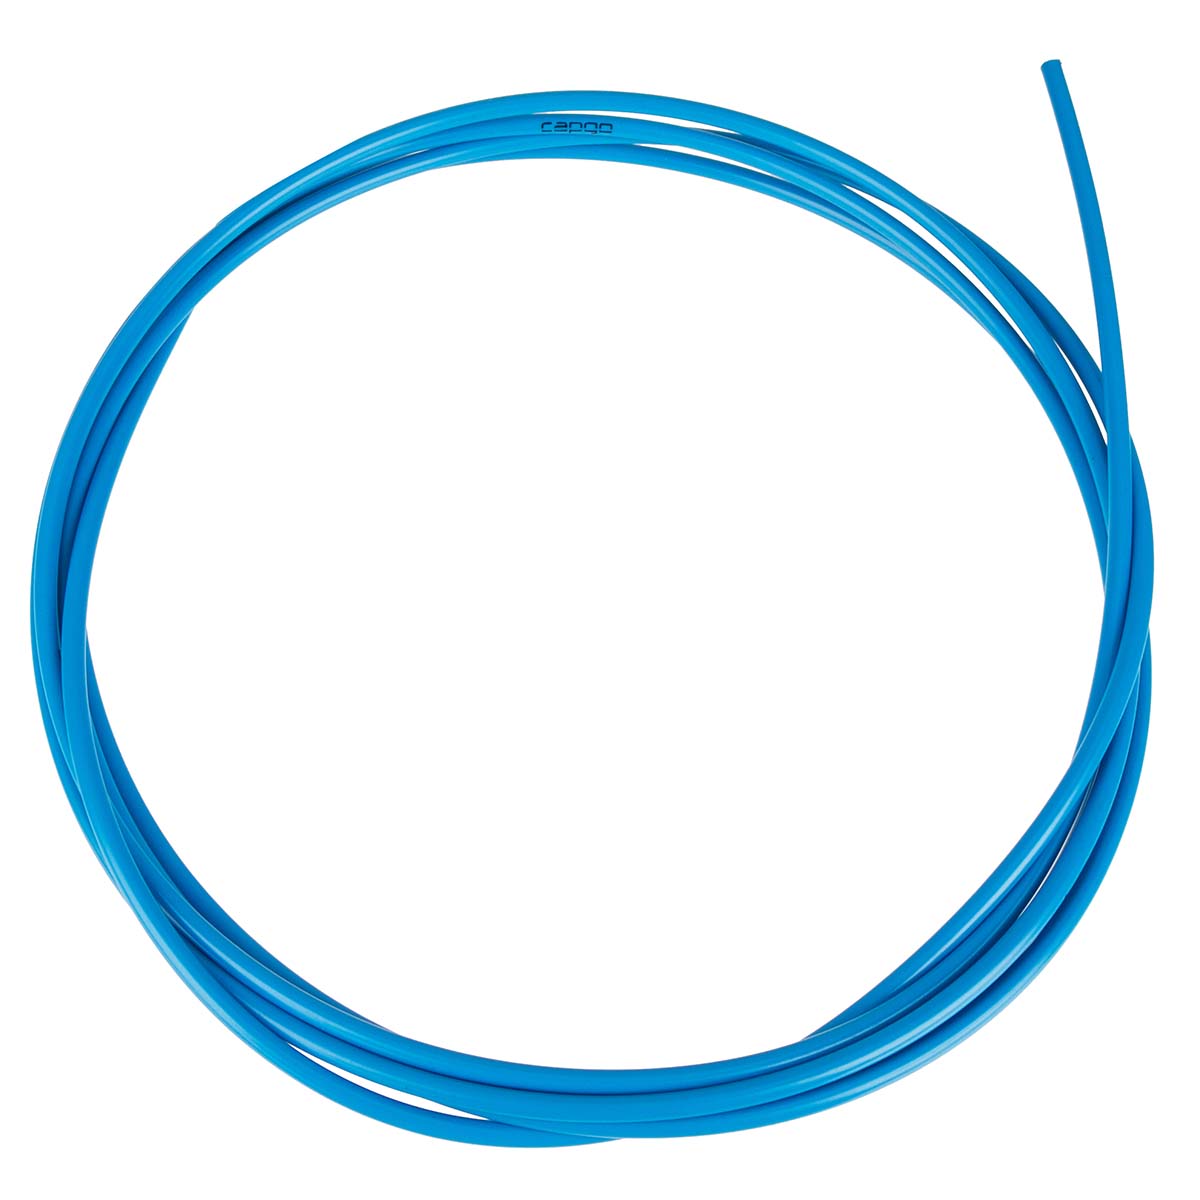 Capgo Cable Systems Schaltaußenhülle Blue Line Blau